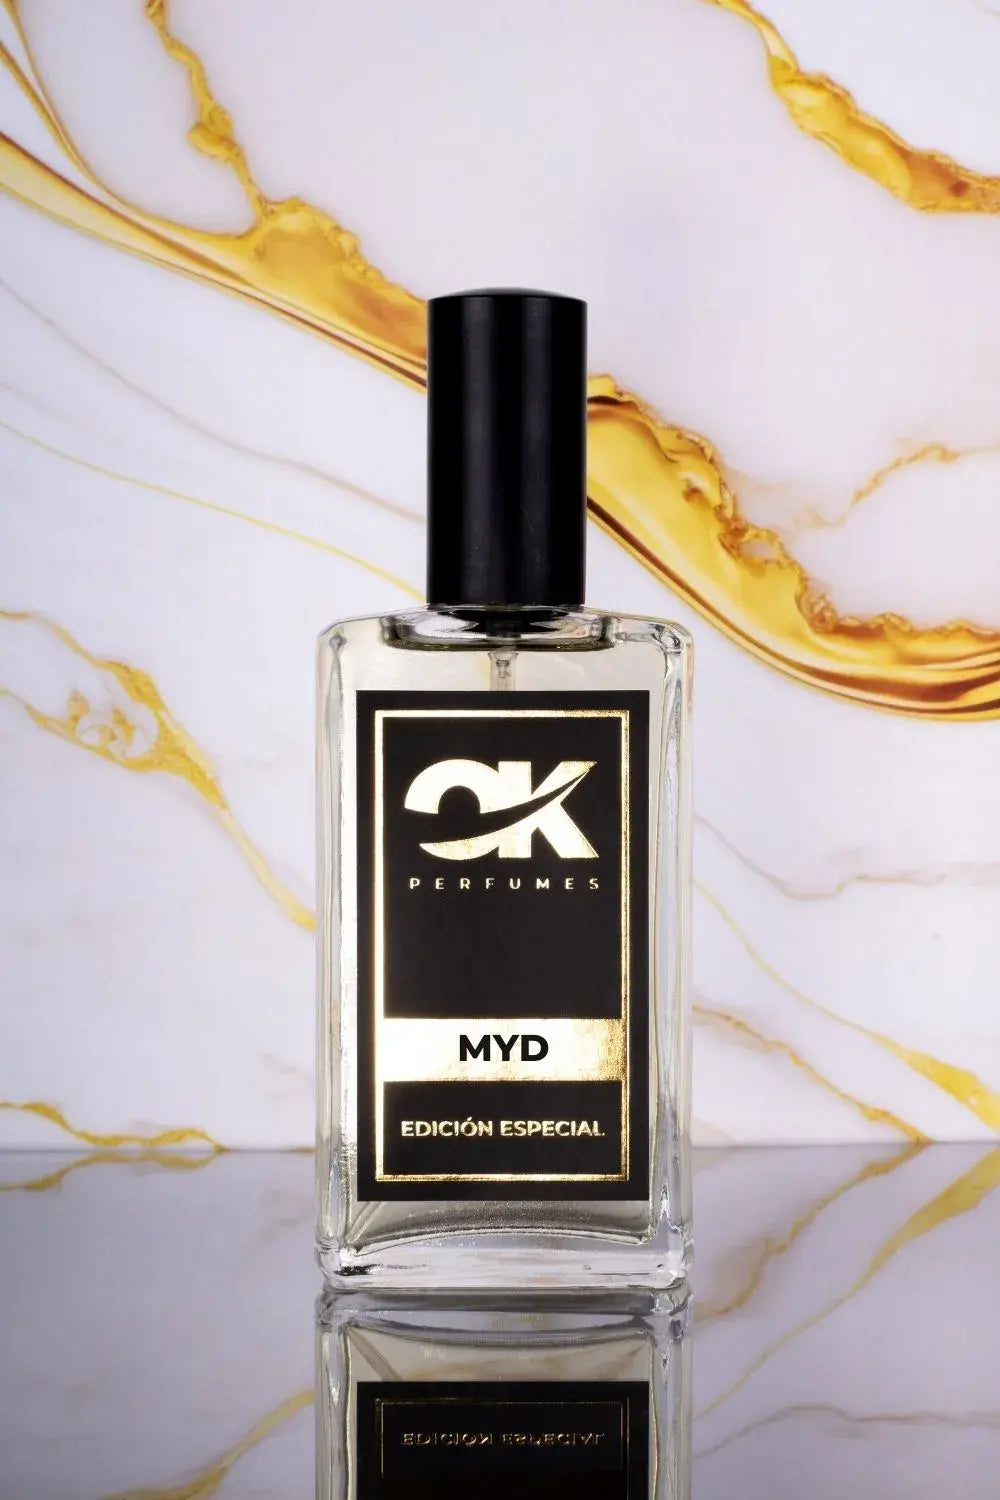 MYD - recuerda a Myriad de Louis Vuitton